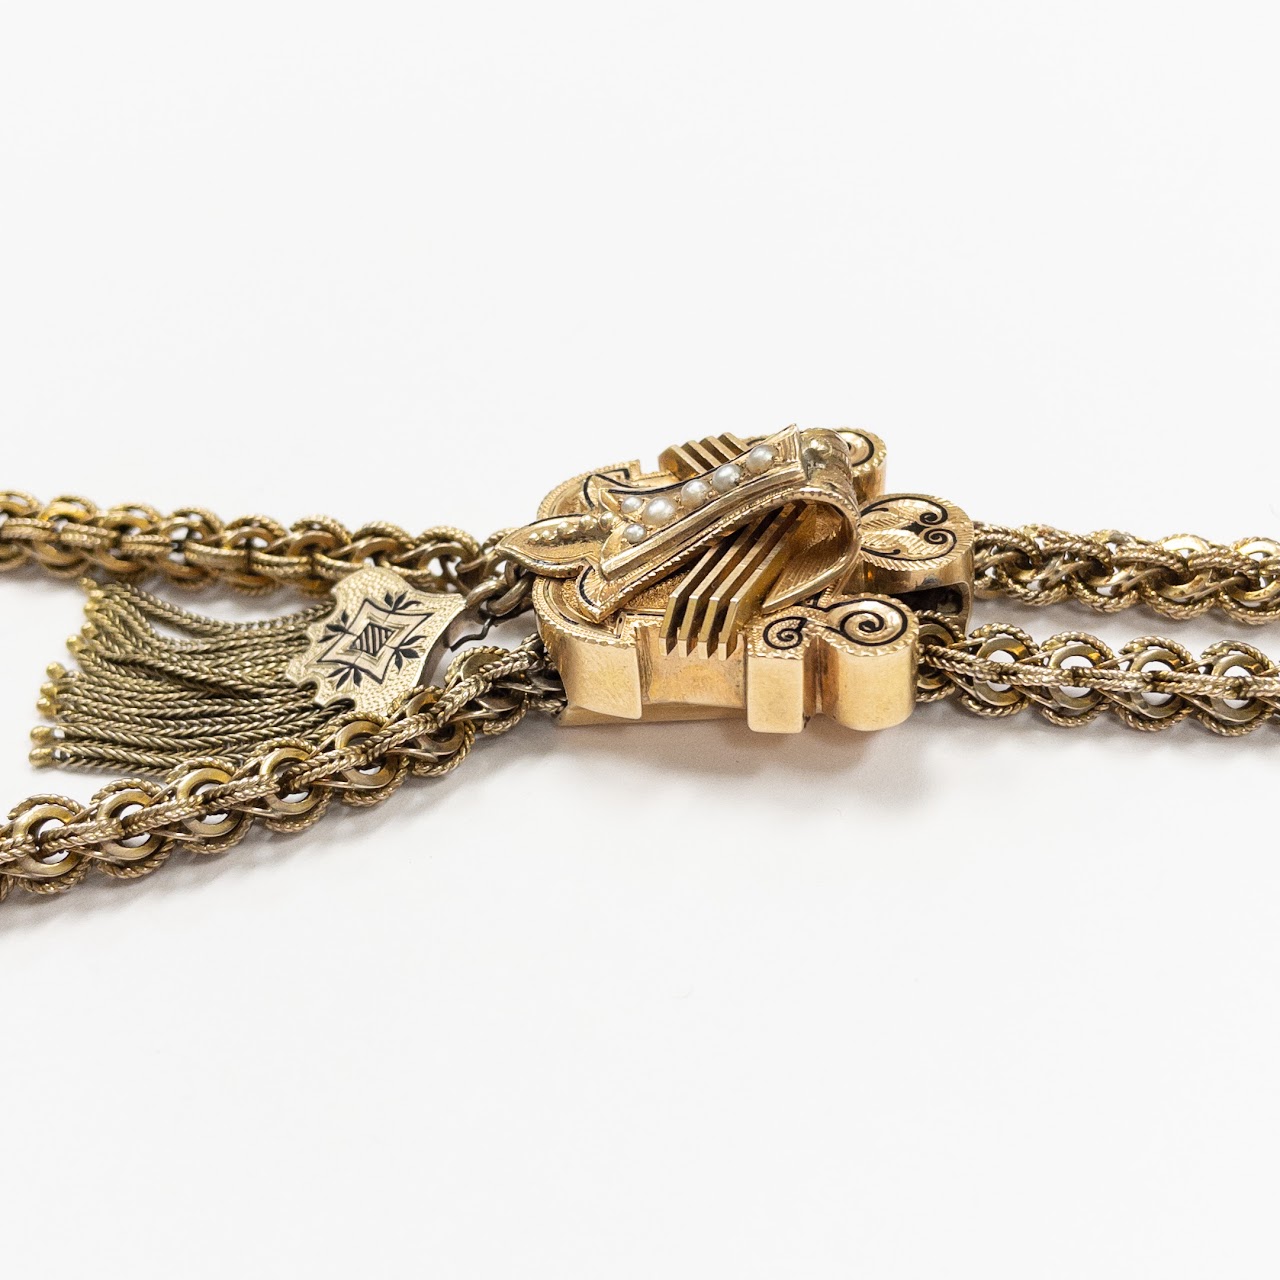 9K Gold Victorian Watch Chain with Slide